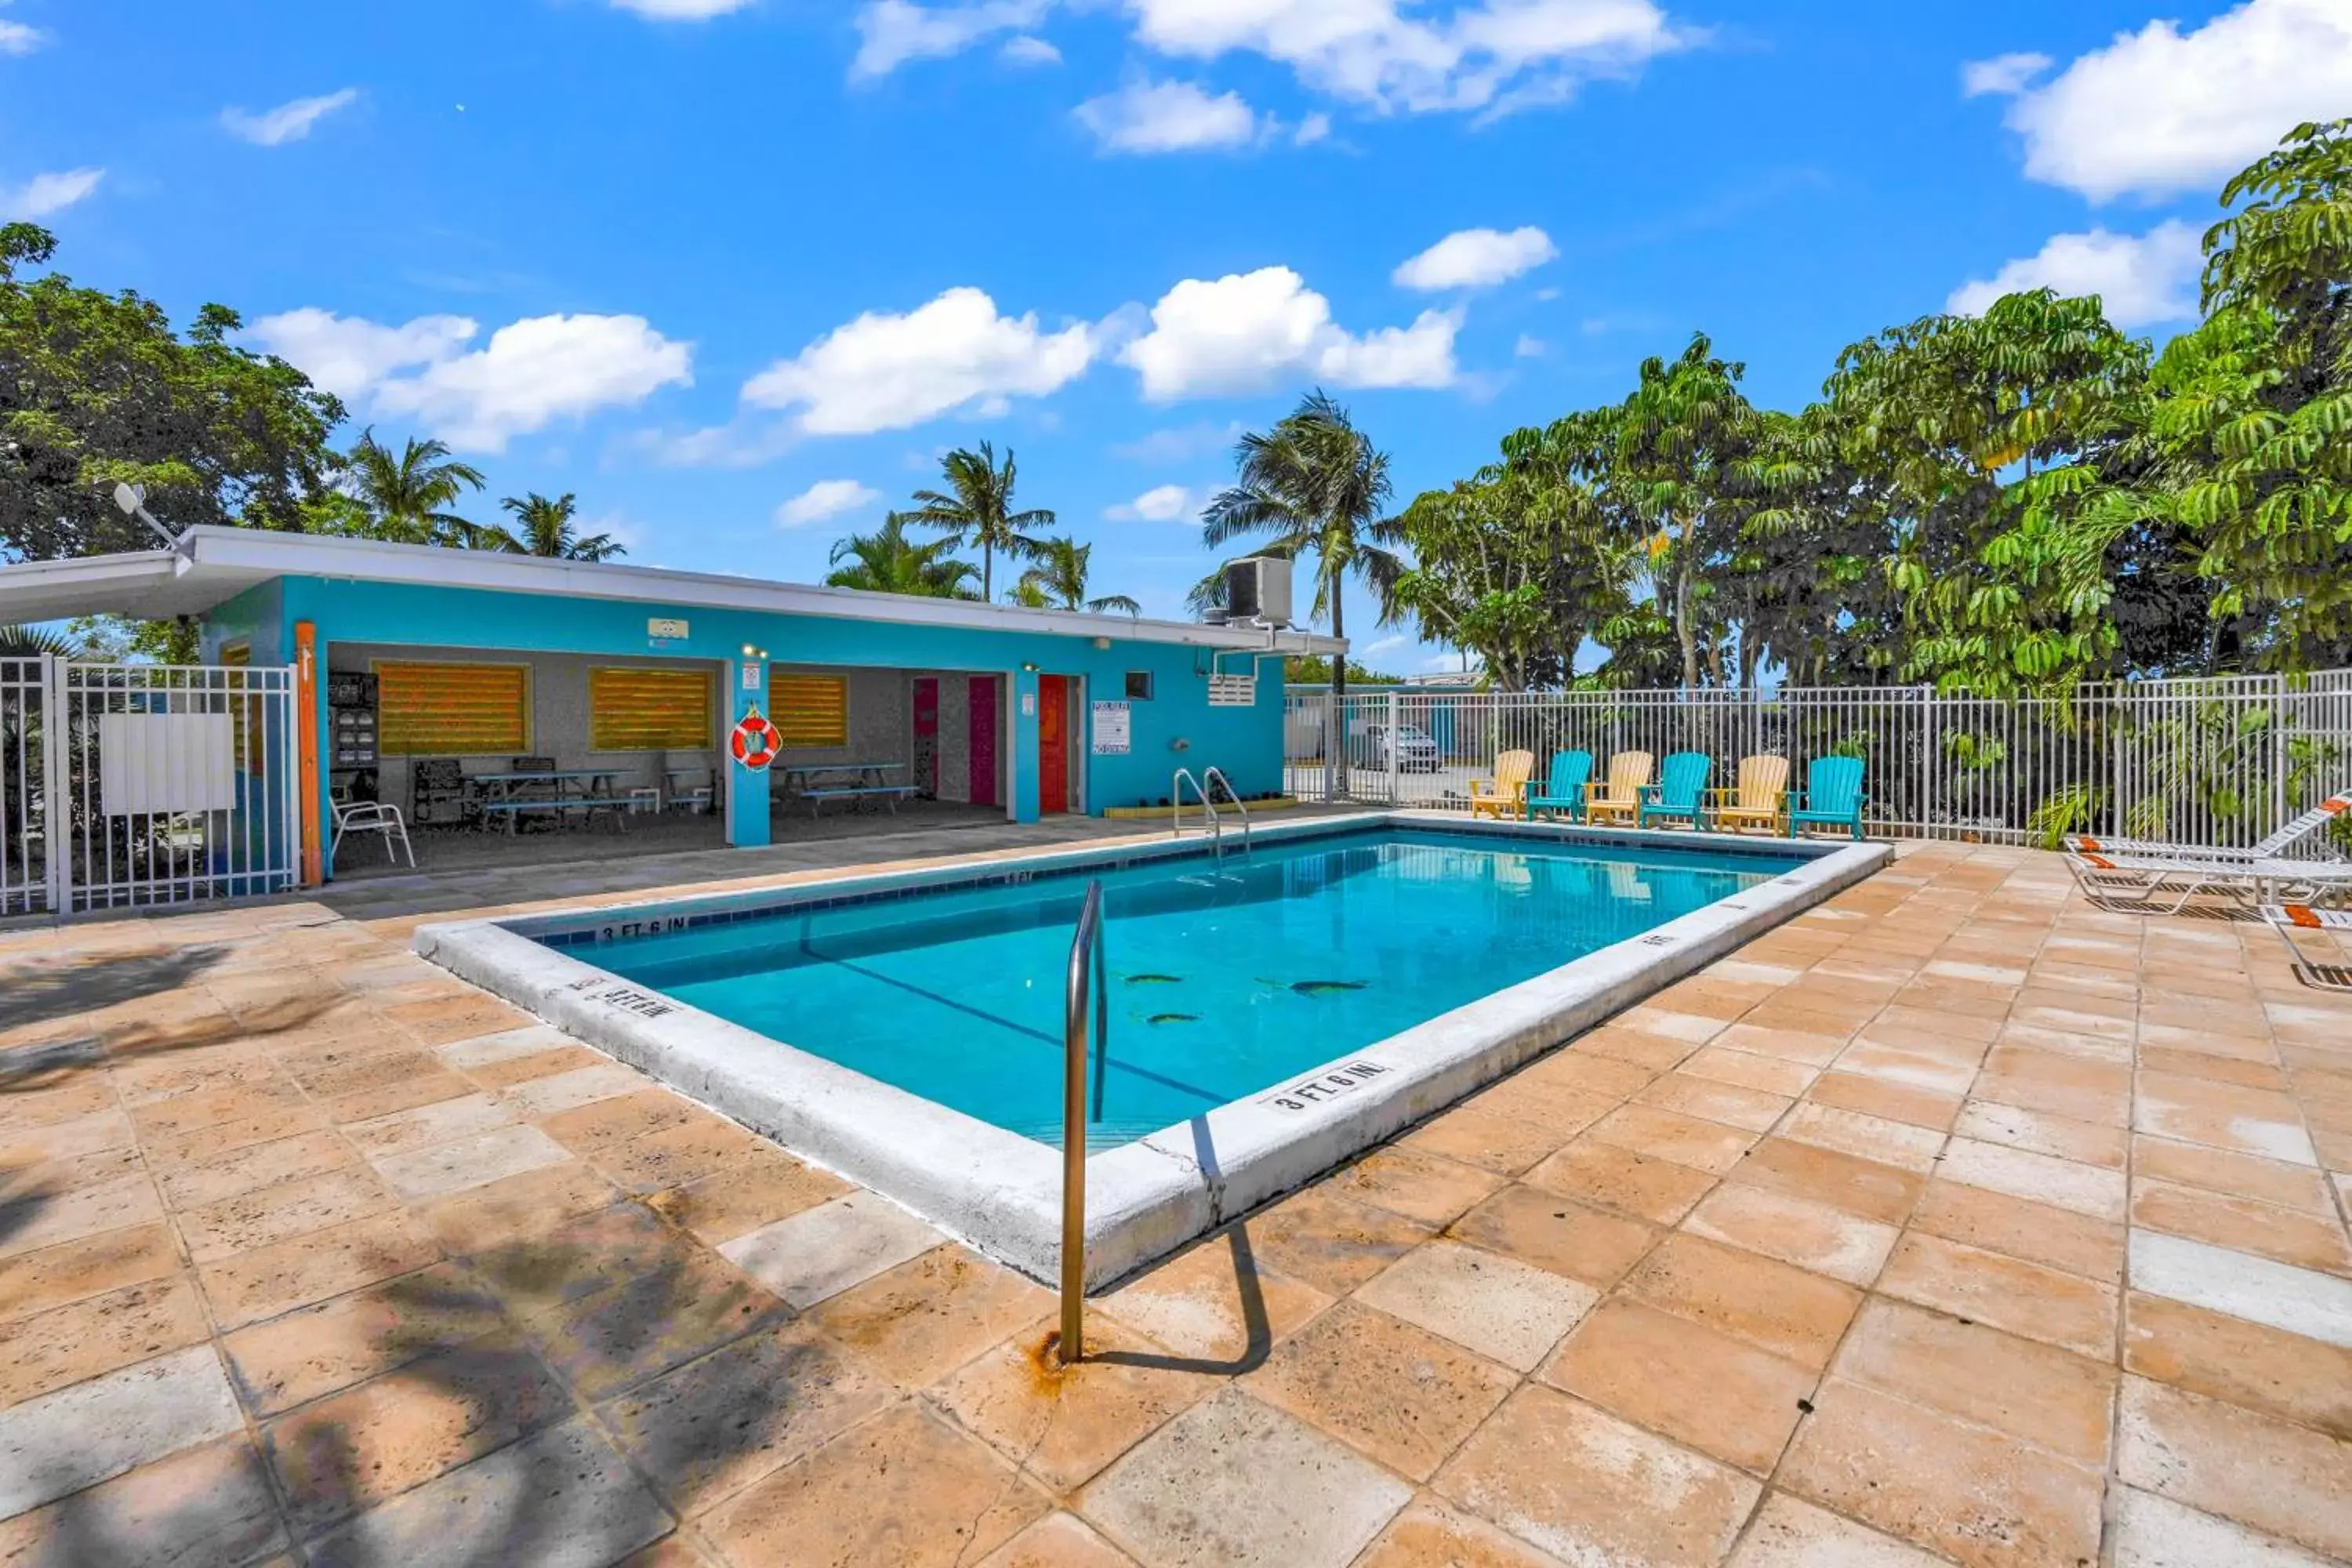 Swimming Pool in Coconut Cay Resort